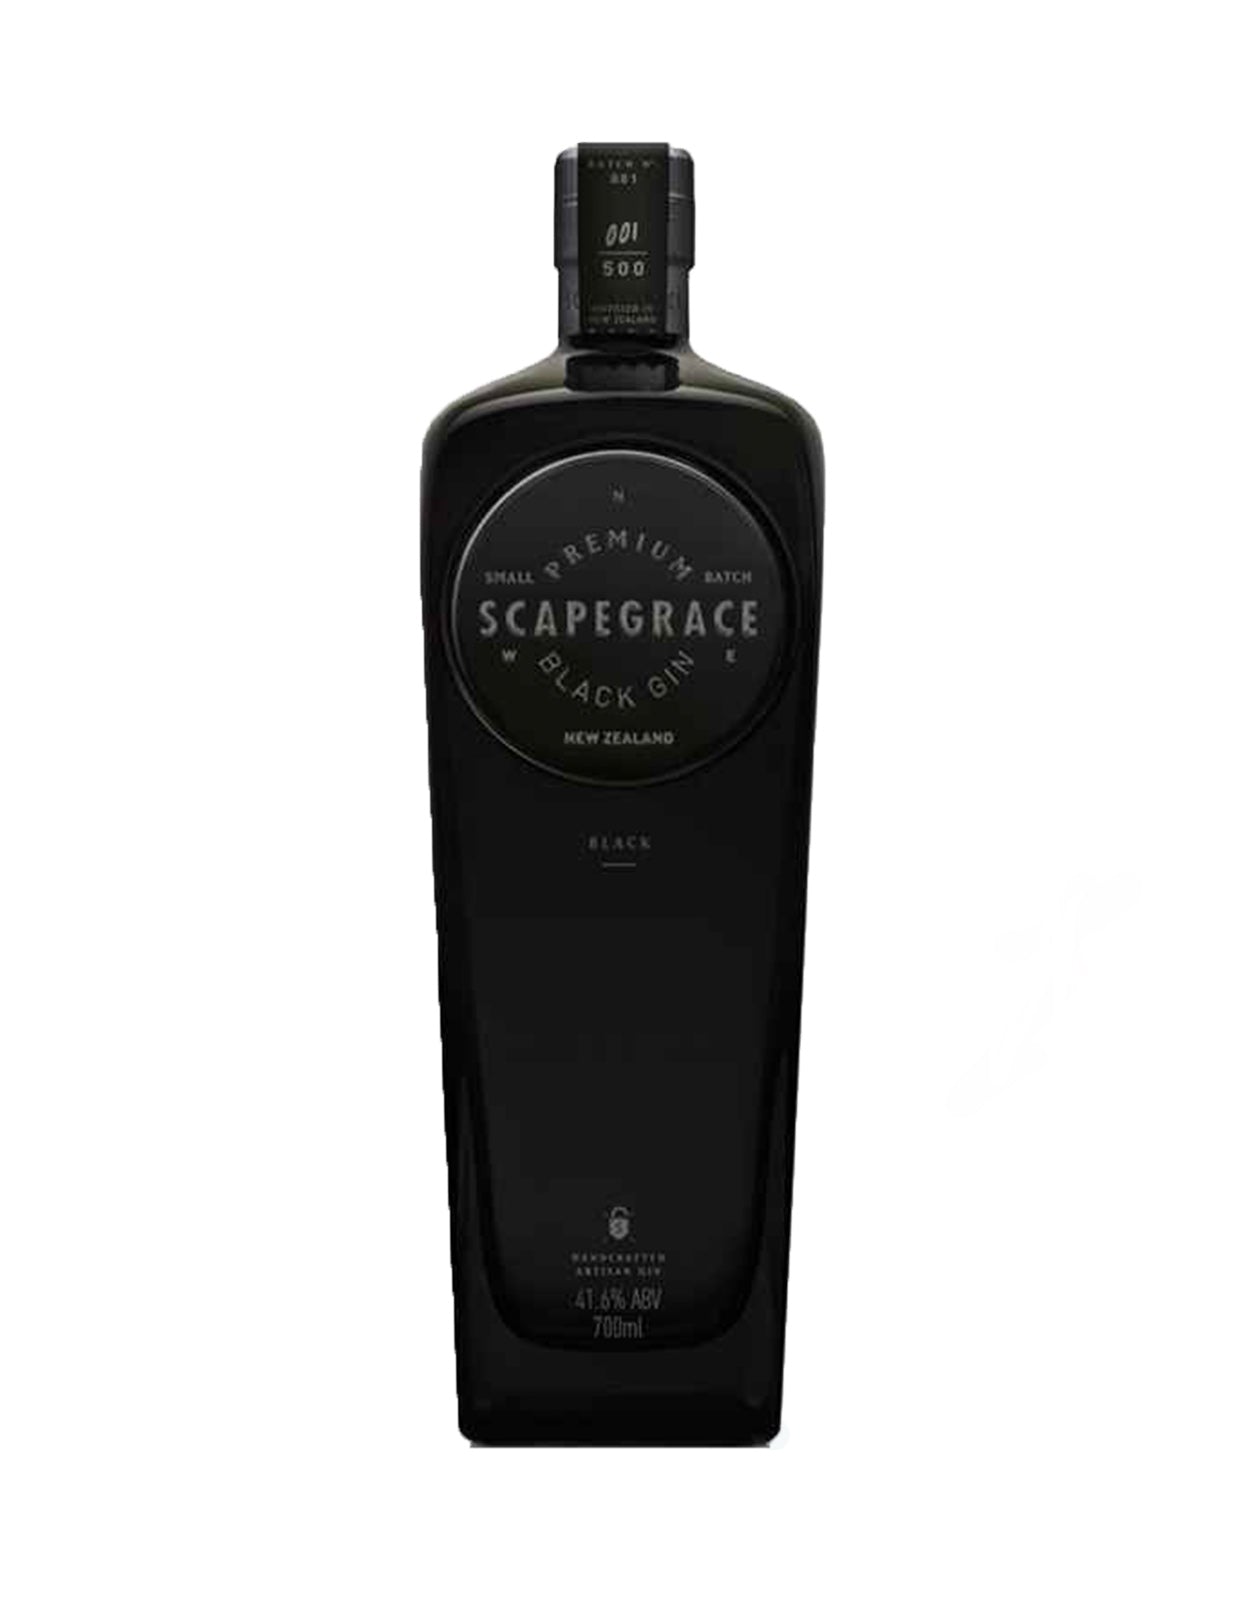 Scapegrace Black Gin